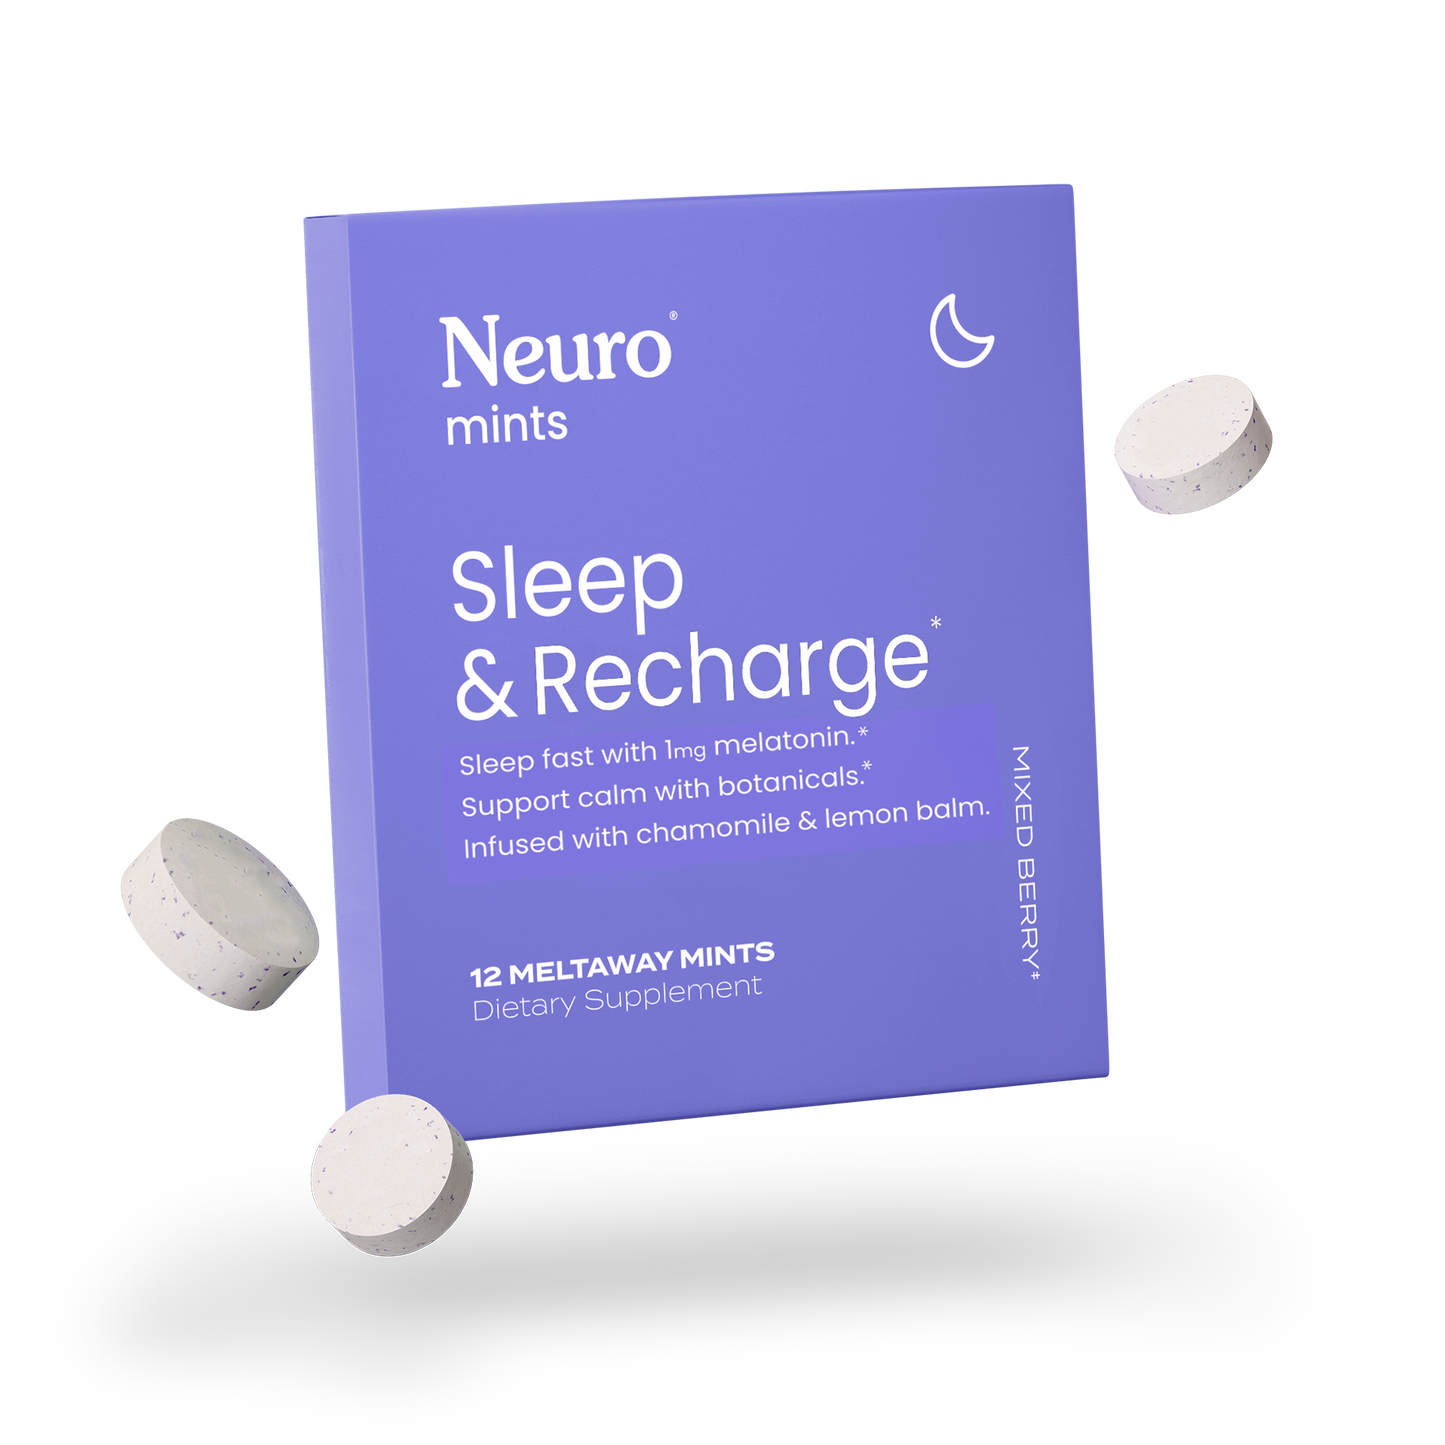 Sleep & Recharge Meltaway Mints